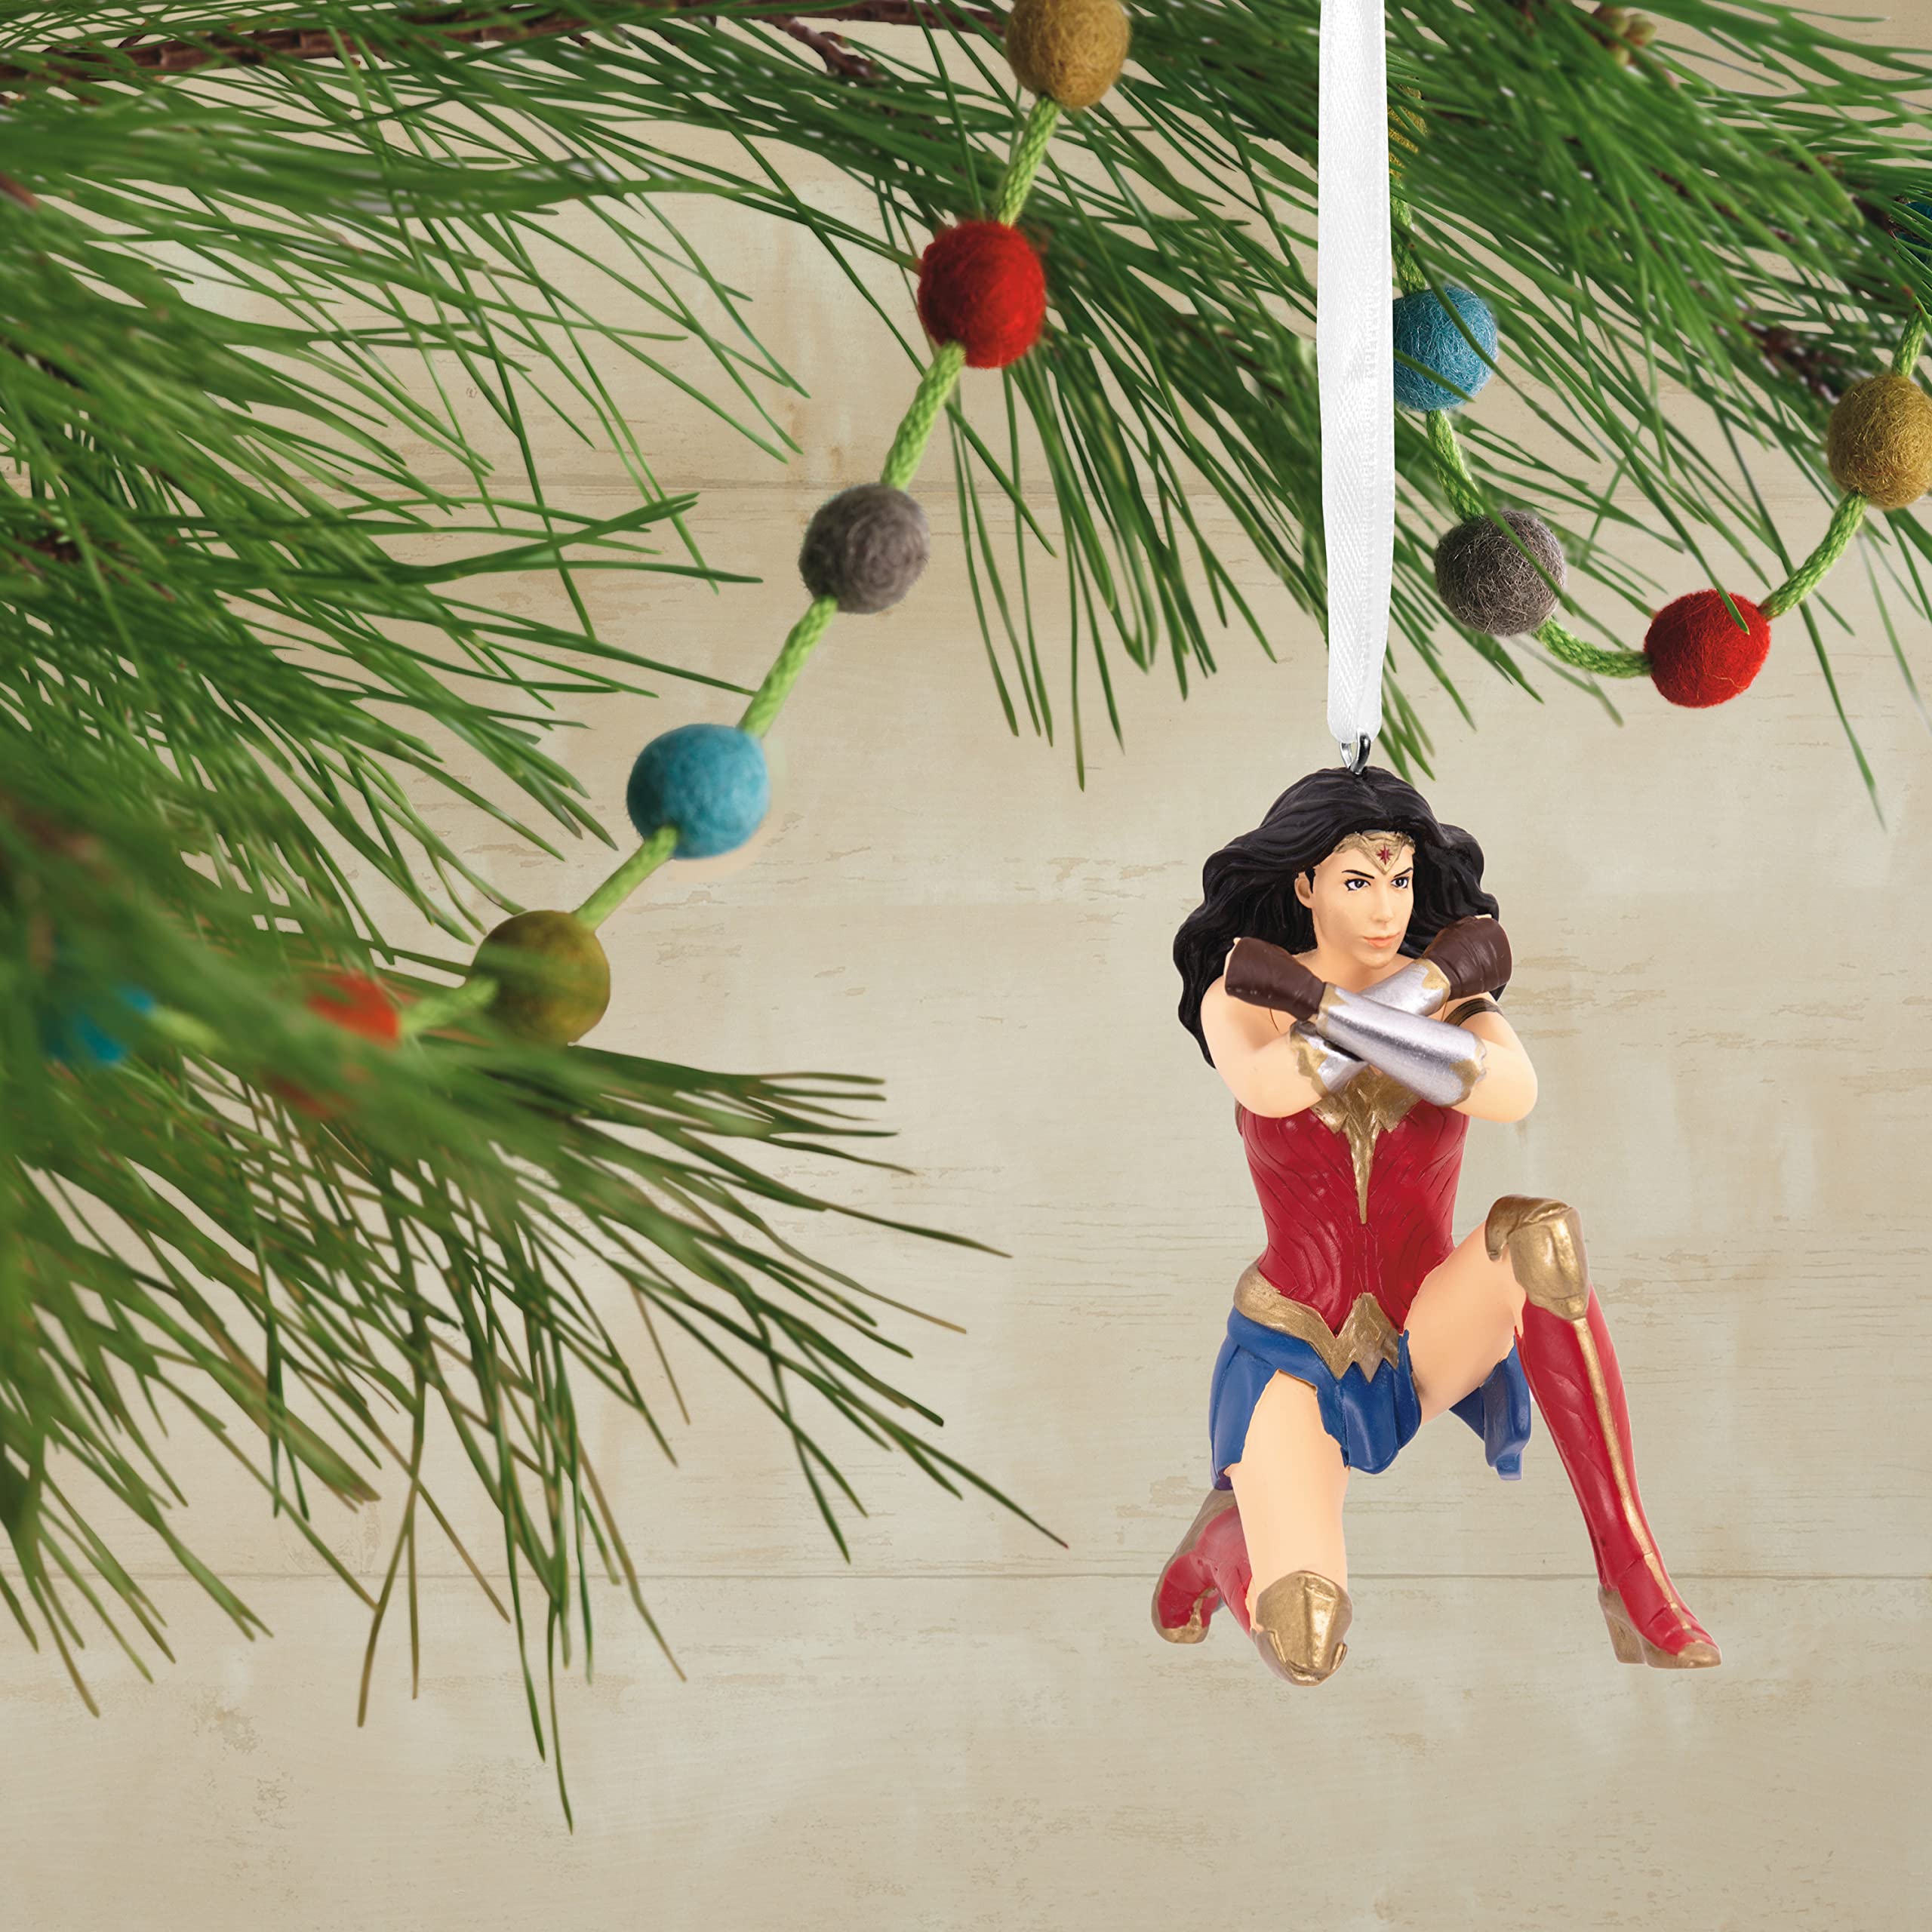 Wonder Woman Hallmark DC Christmas Ornament